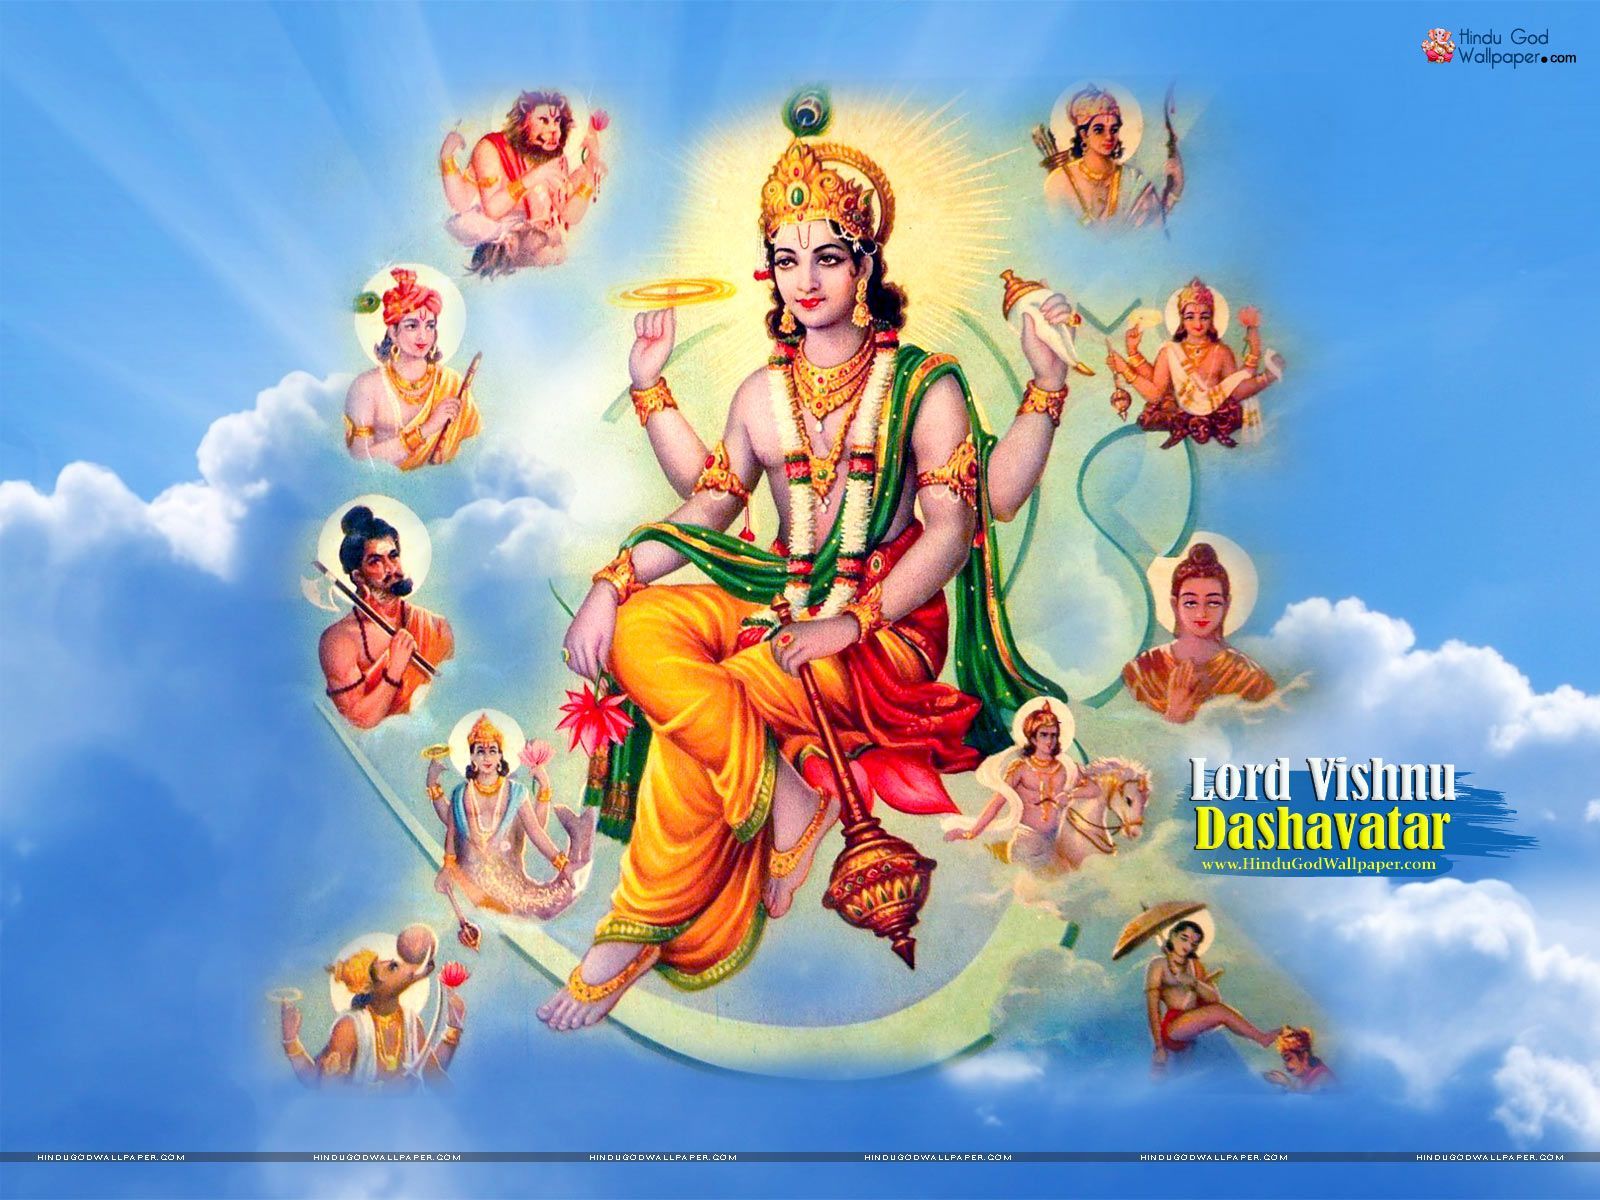 Dashavatar Wallpaper, Image & Photo Free Download. Lord vishnu